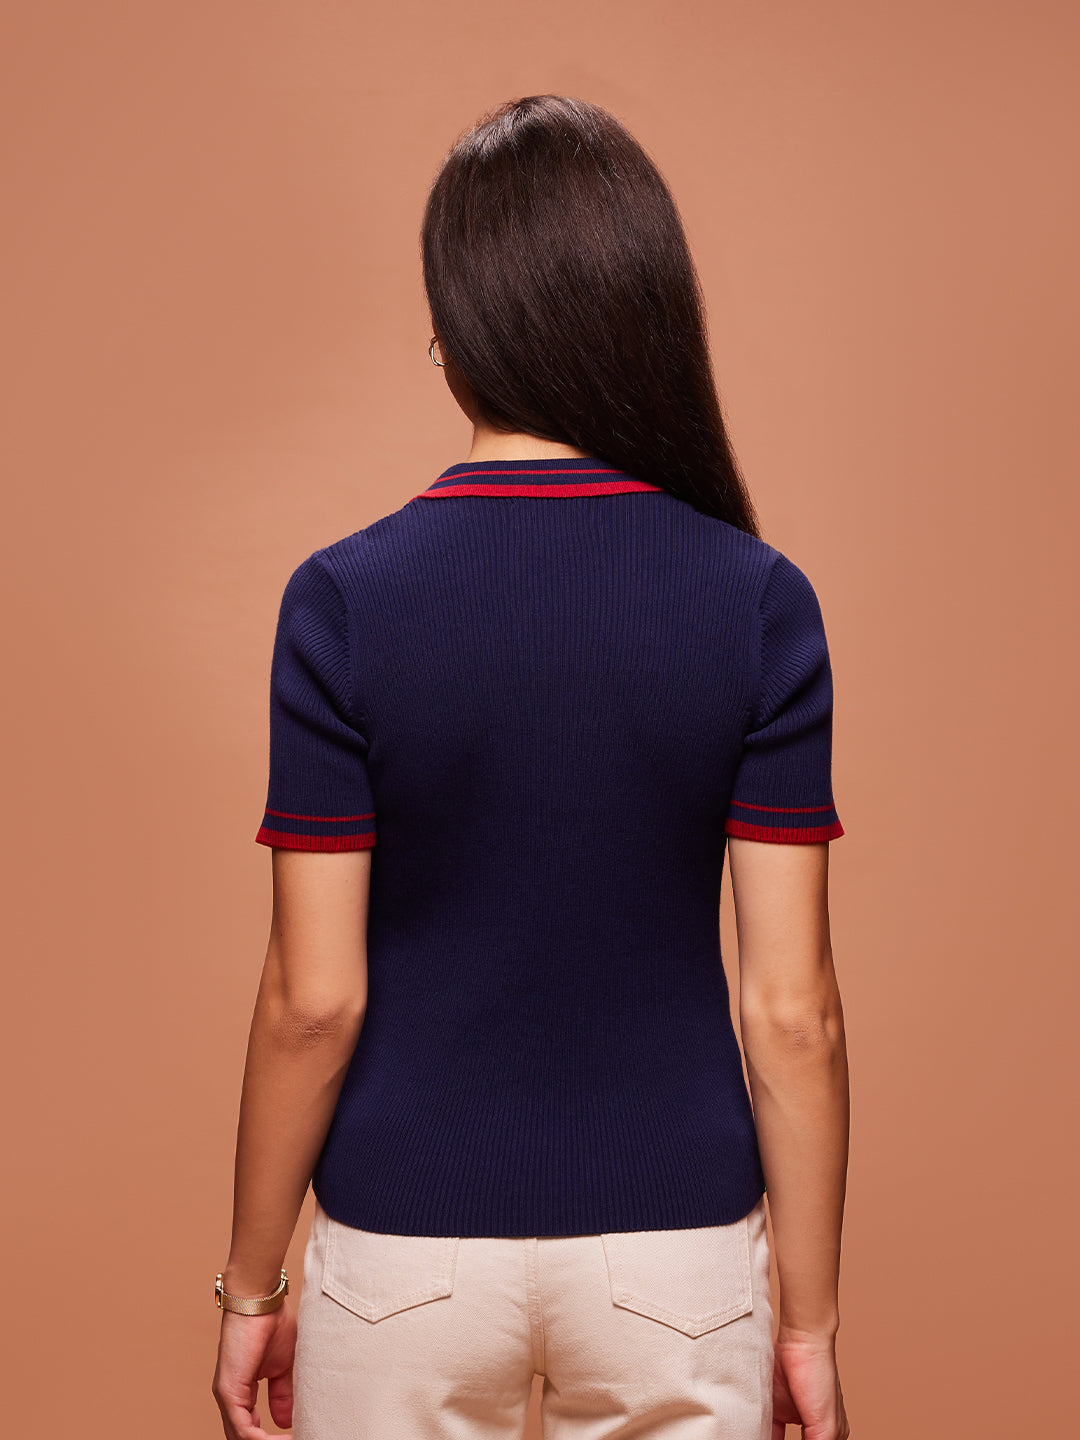 Bombay High Women's Premium Cotton Blend Ribbed Knit Polo T-Shirt